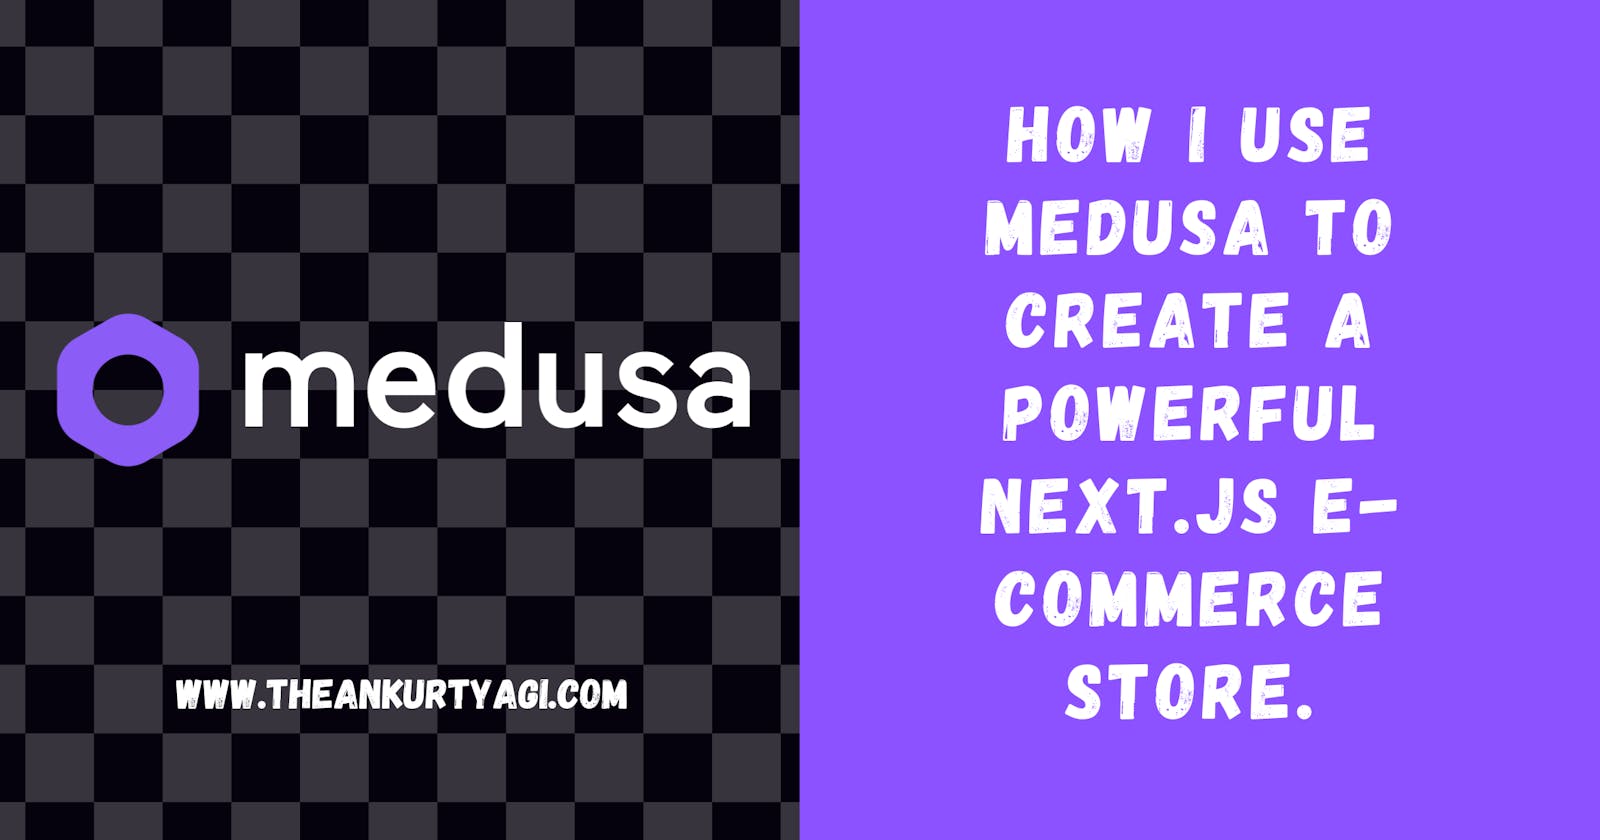 How I Use Medusa to Create a Powerful Next.js E-commerce Store